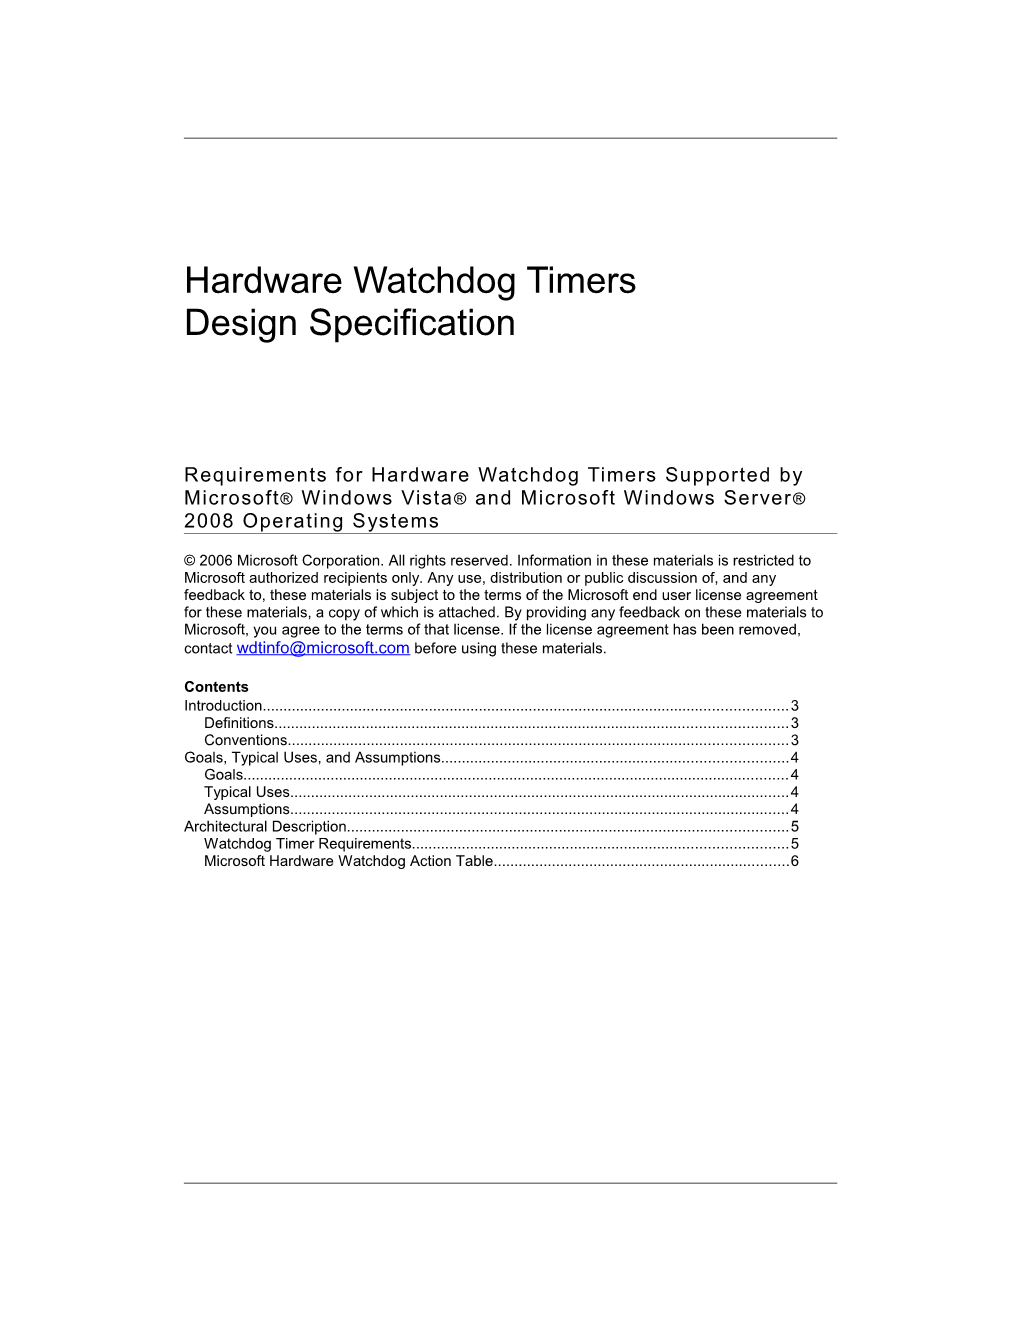 Microsoft Hardware Watchdog Timers Design Specification